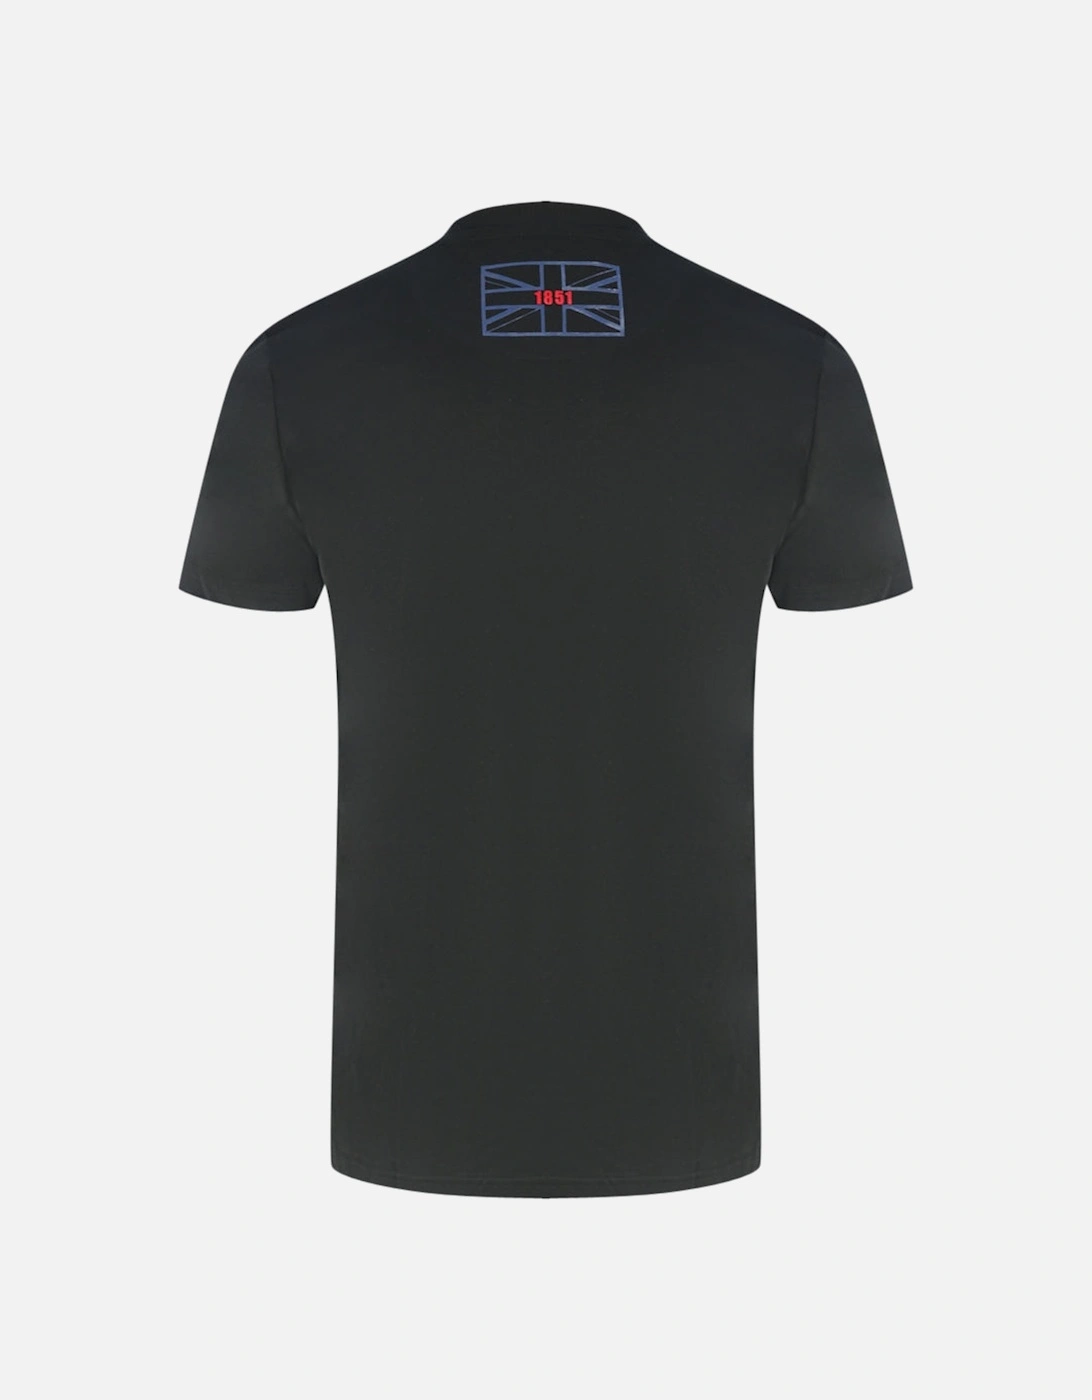 London Circle Logo Black T-Shirt